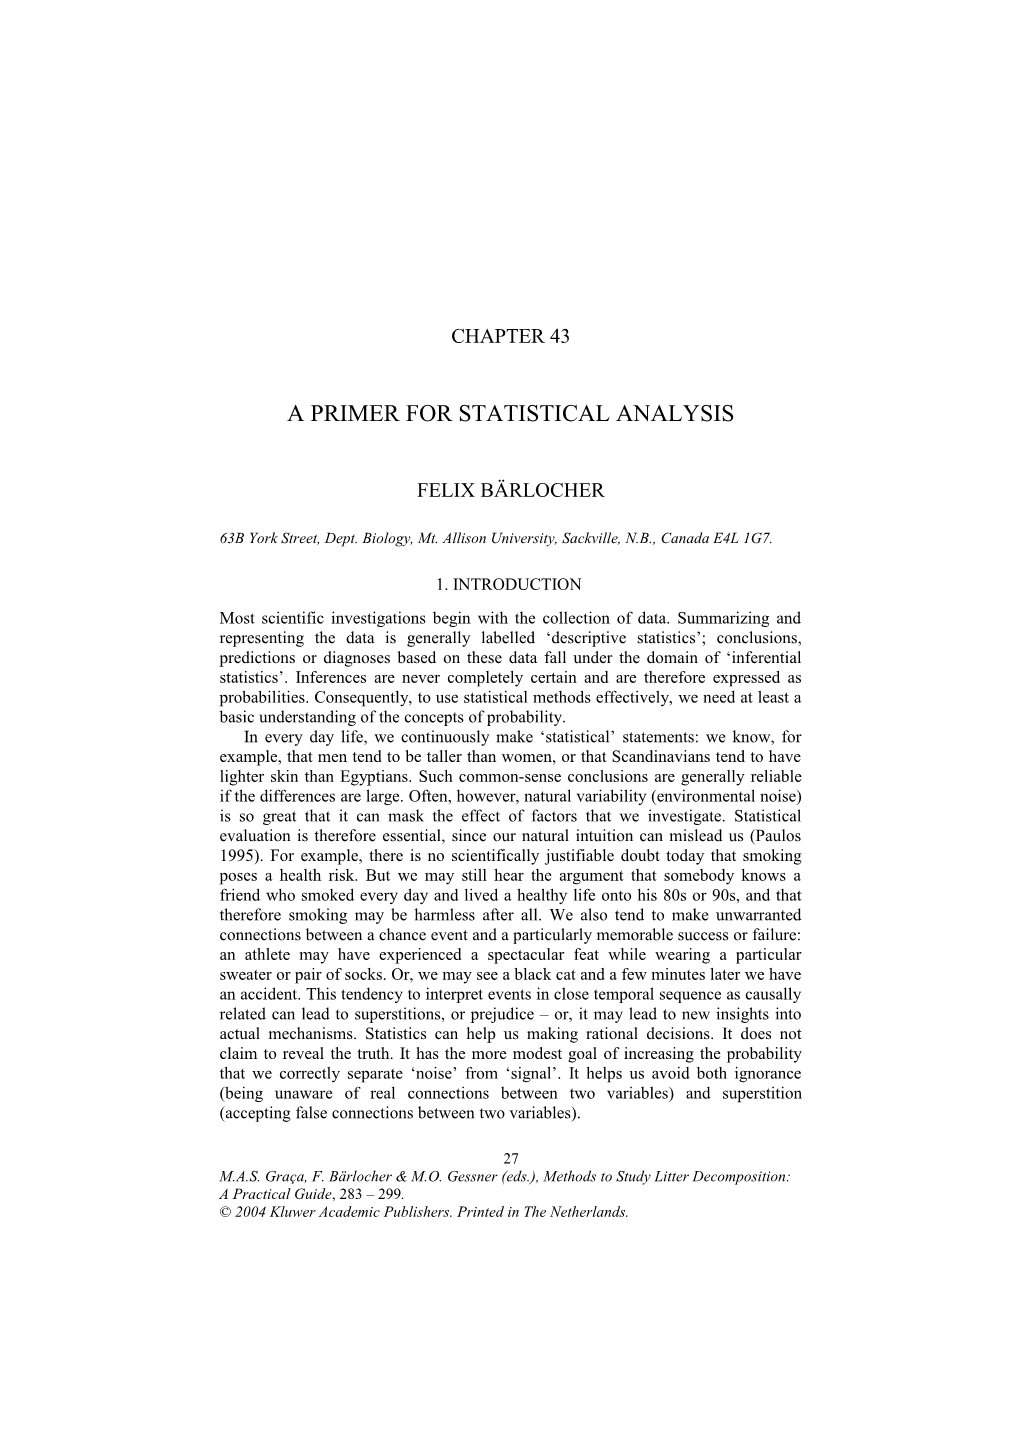 Primer for Statistical Analysis 299